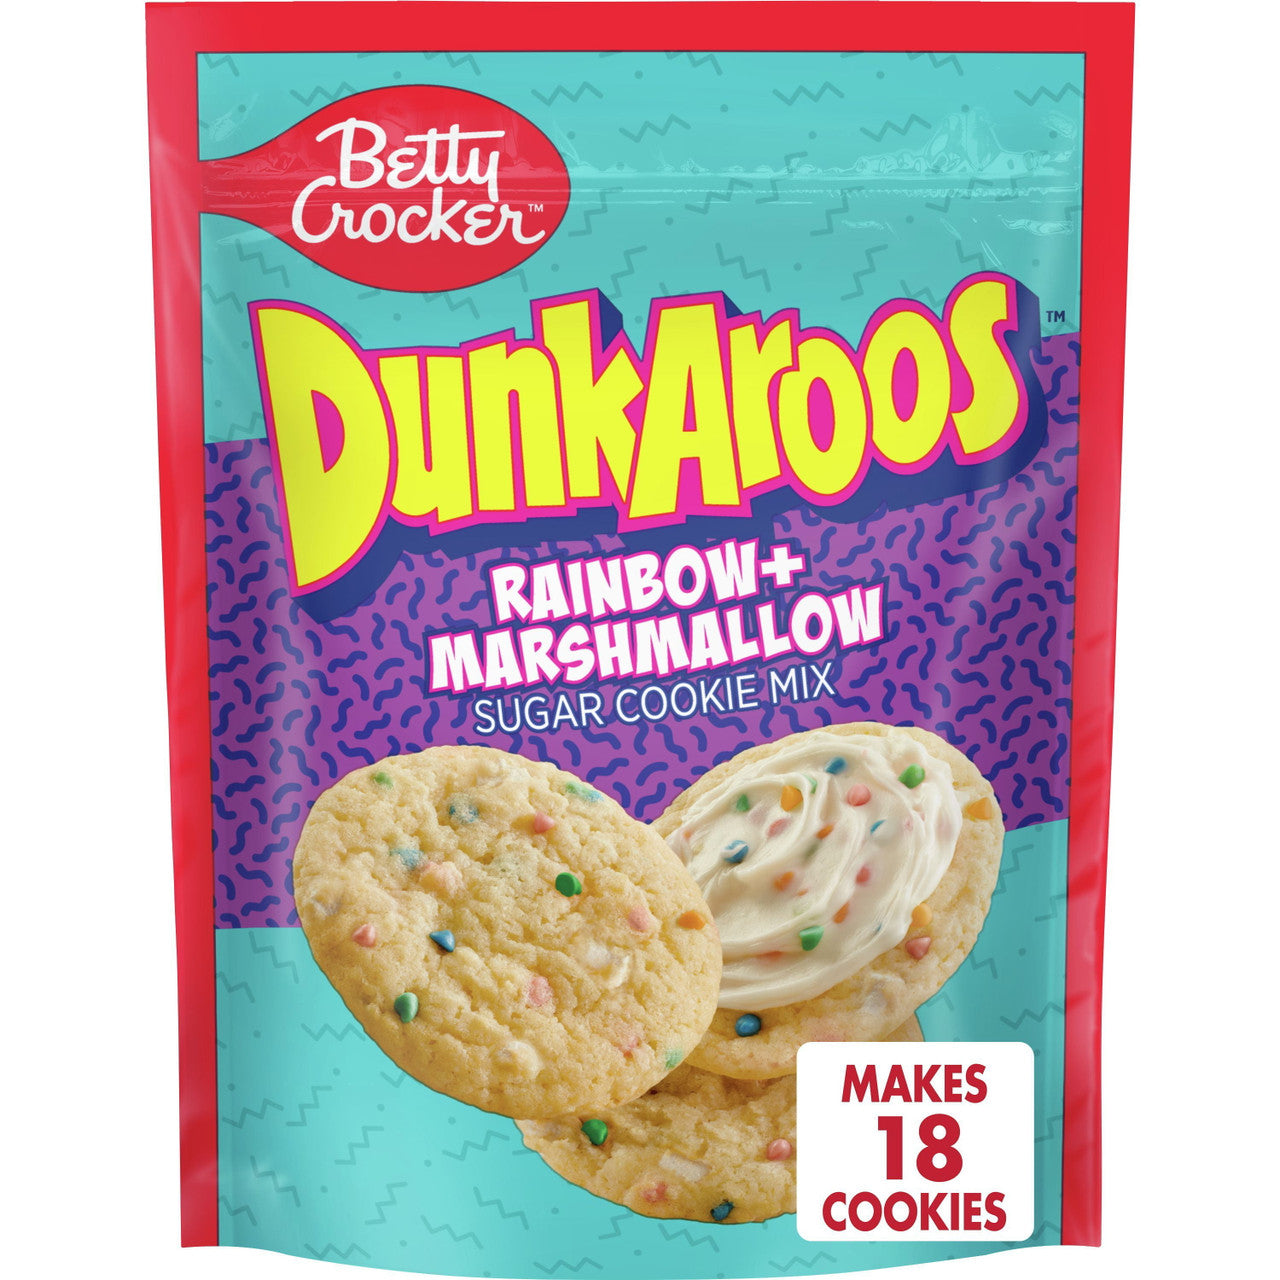 Betty Crocker DunkAroos Rainbow & Marshmallow Sugar Cookie Mix, 357g/12.6 oz. Bag {Imported from Canada}